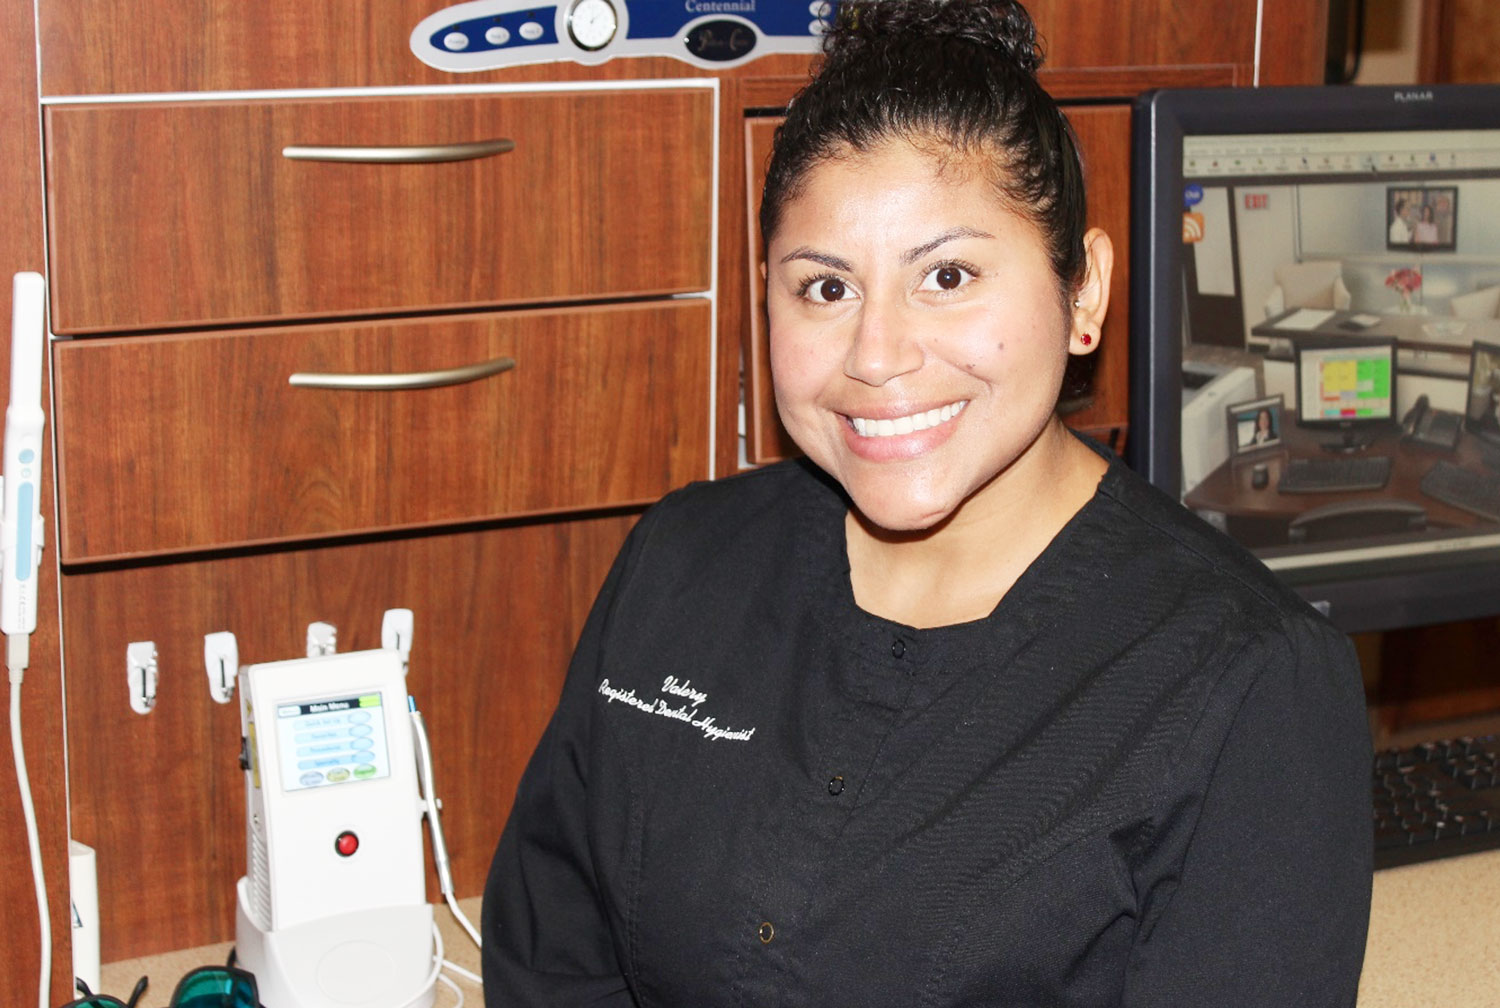 Dental-hygene-services-with-laser-Scottsdale-Arizona